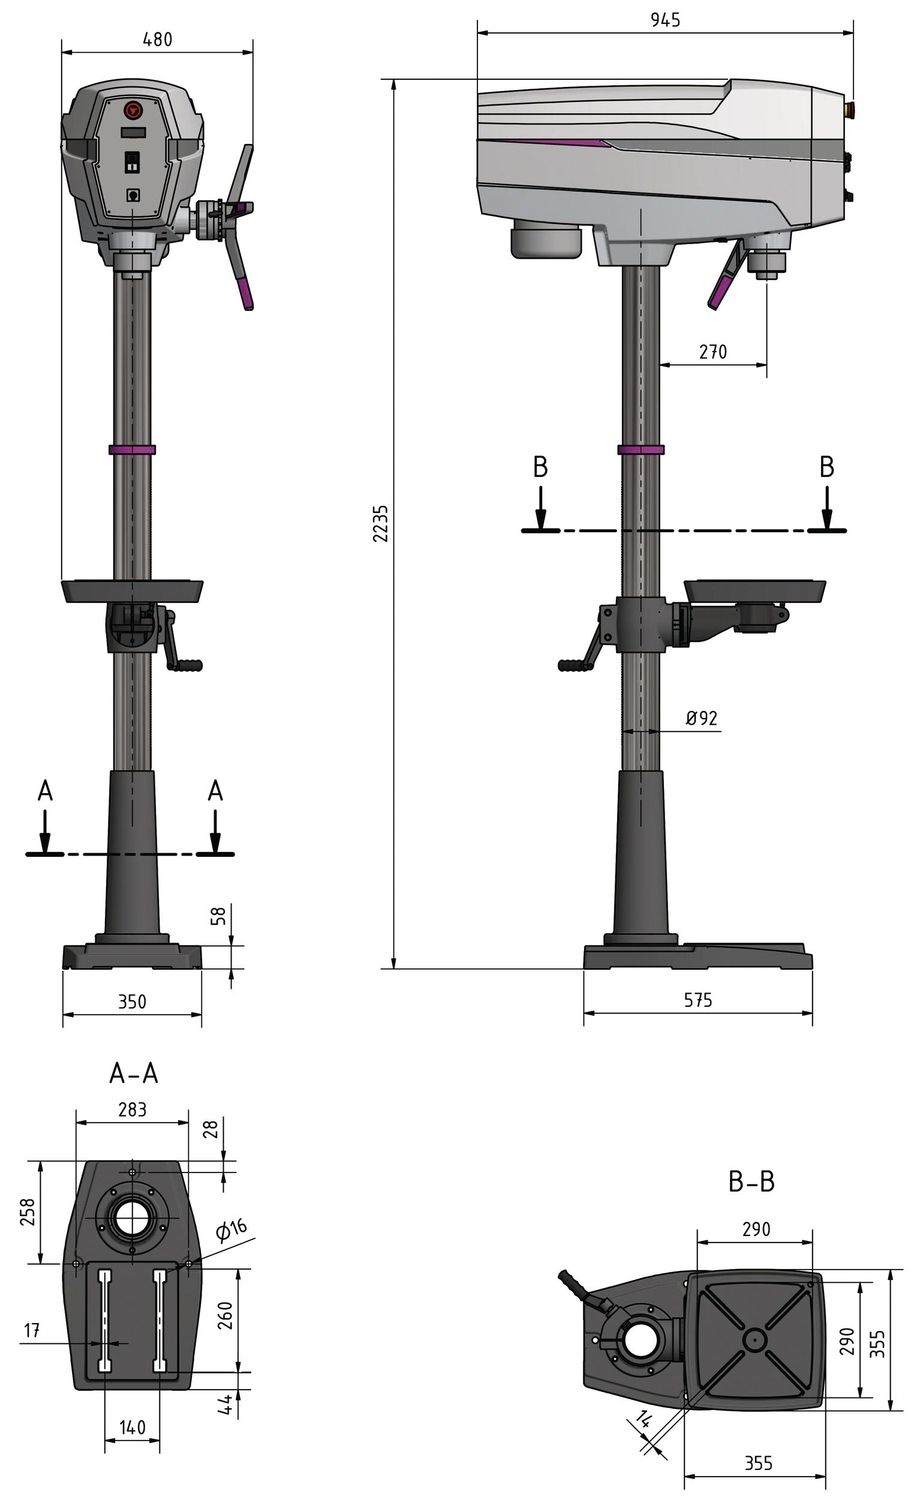 OPTIMUM Säulenbohrmaschine DP 33 - 400 V | SET mit Schraubstock